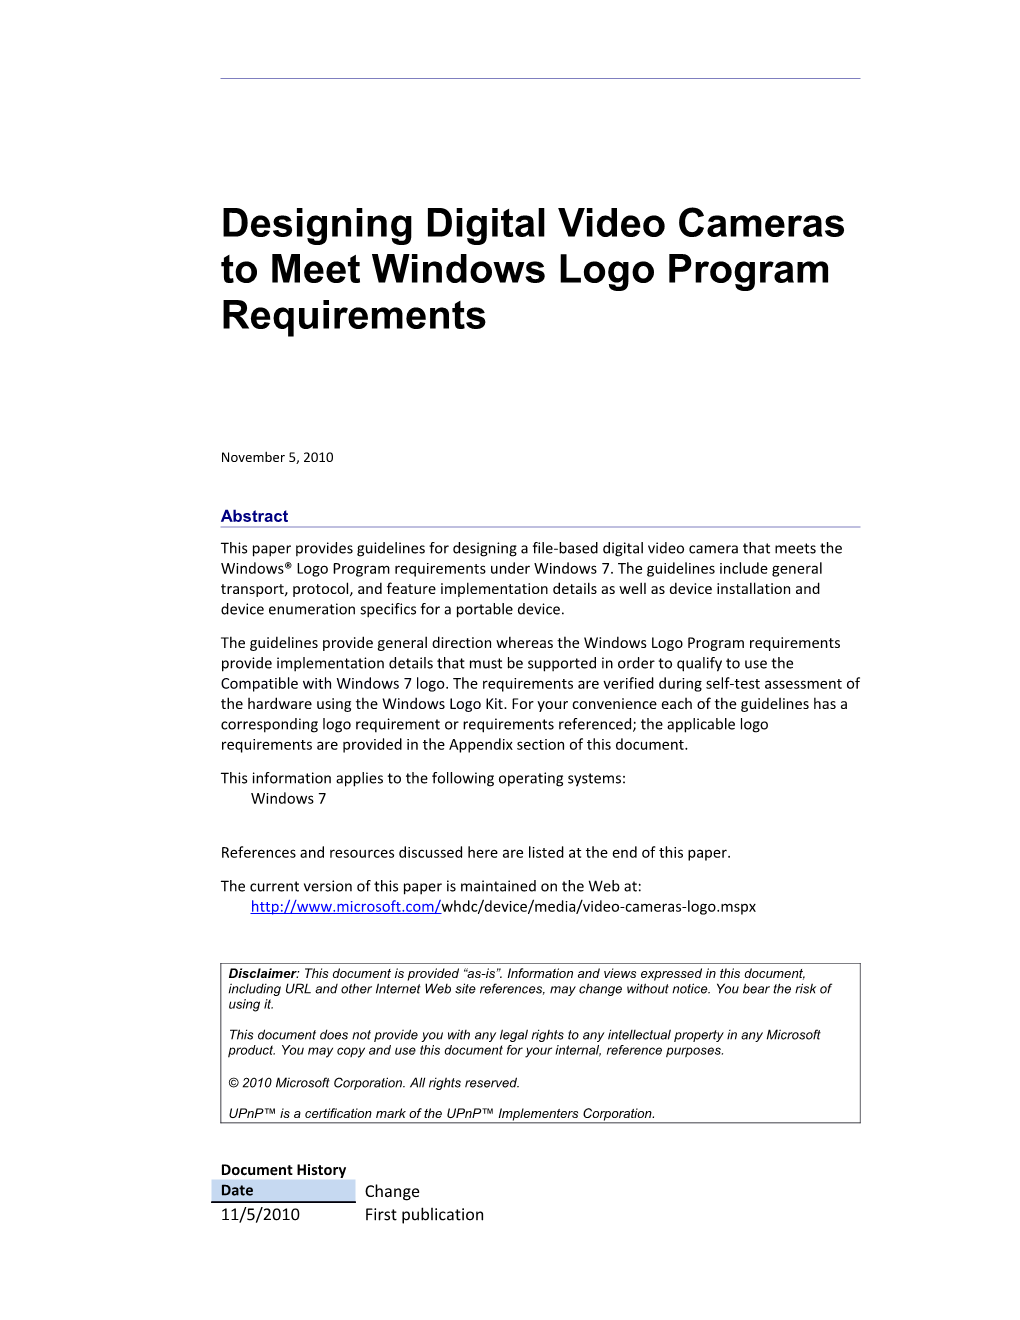 Designing Digital Video Cameras to Meet Windows Logo Program Requirements - 2